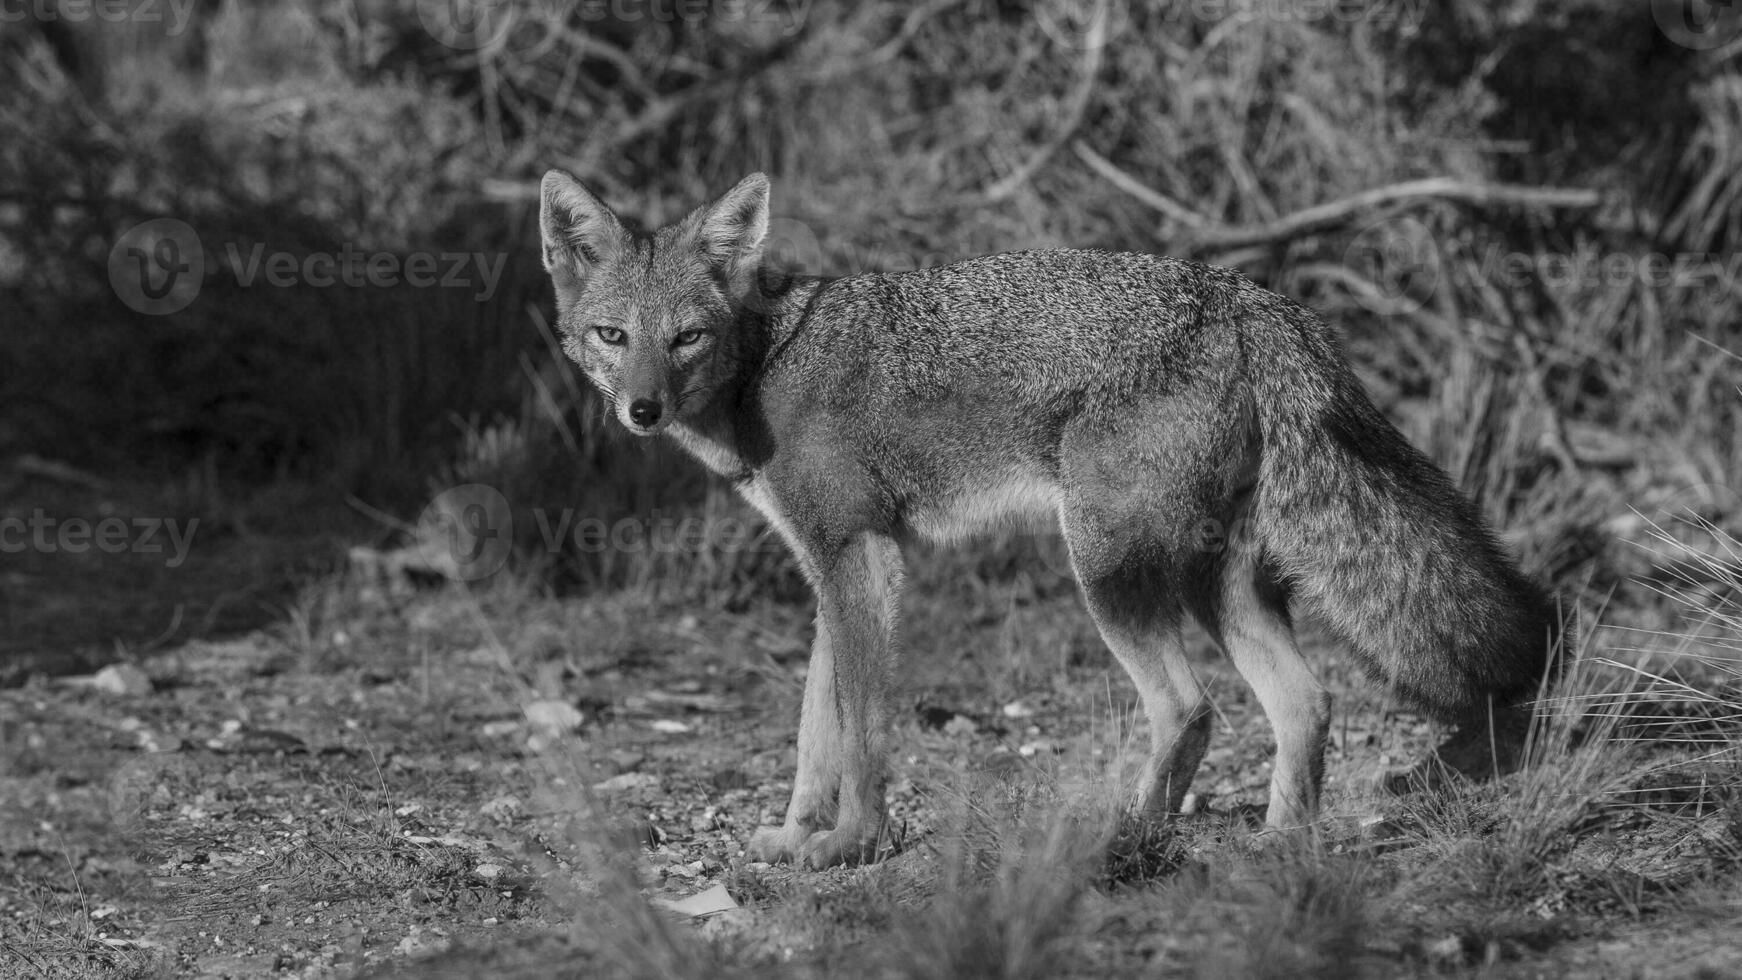 Pampas Grey fox in Pampas grass environment, La Pampa province, Patagonia, Argentina. photo